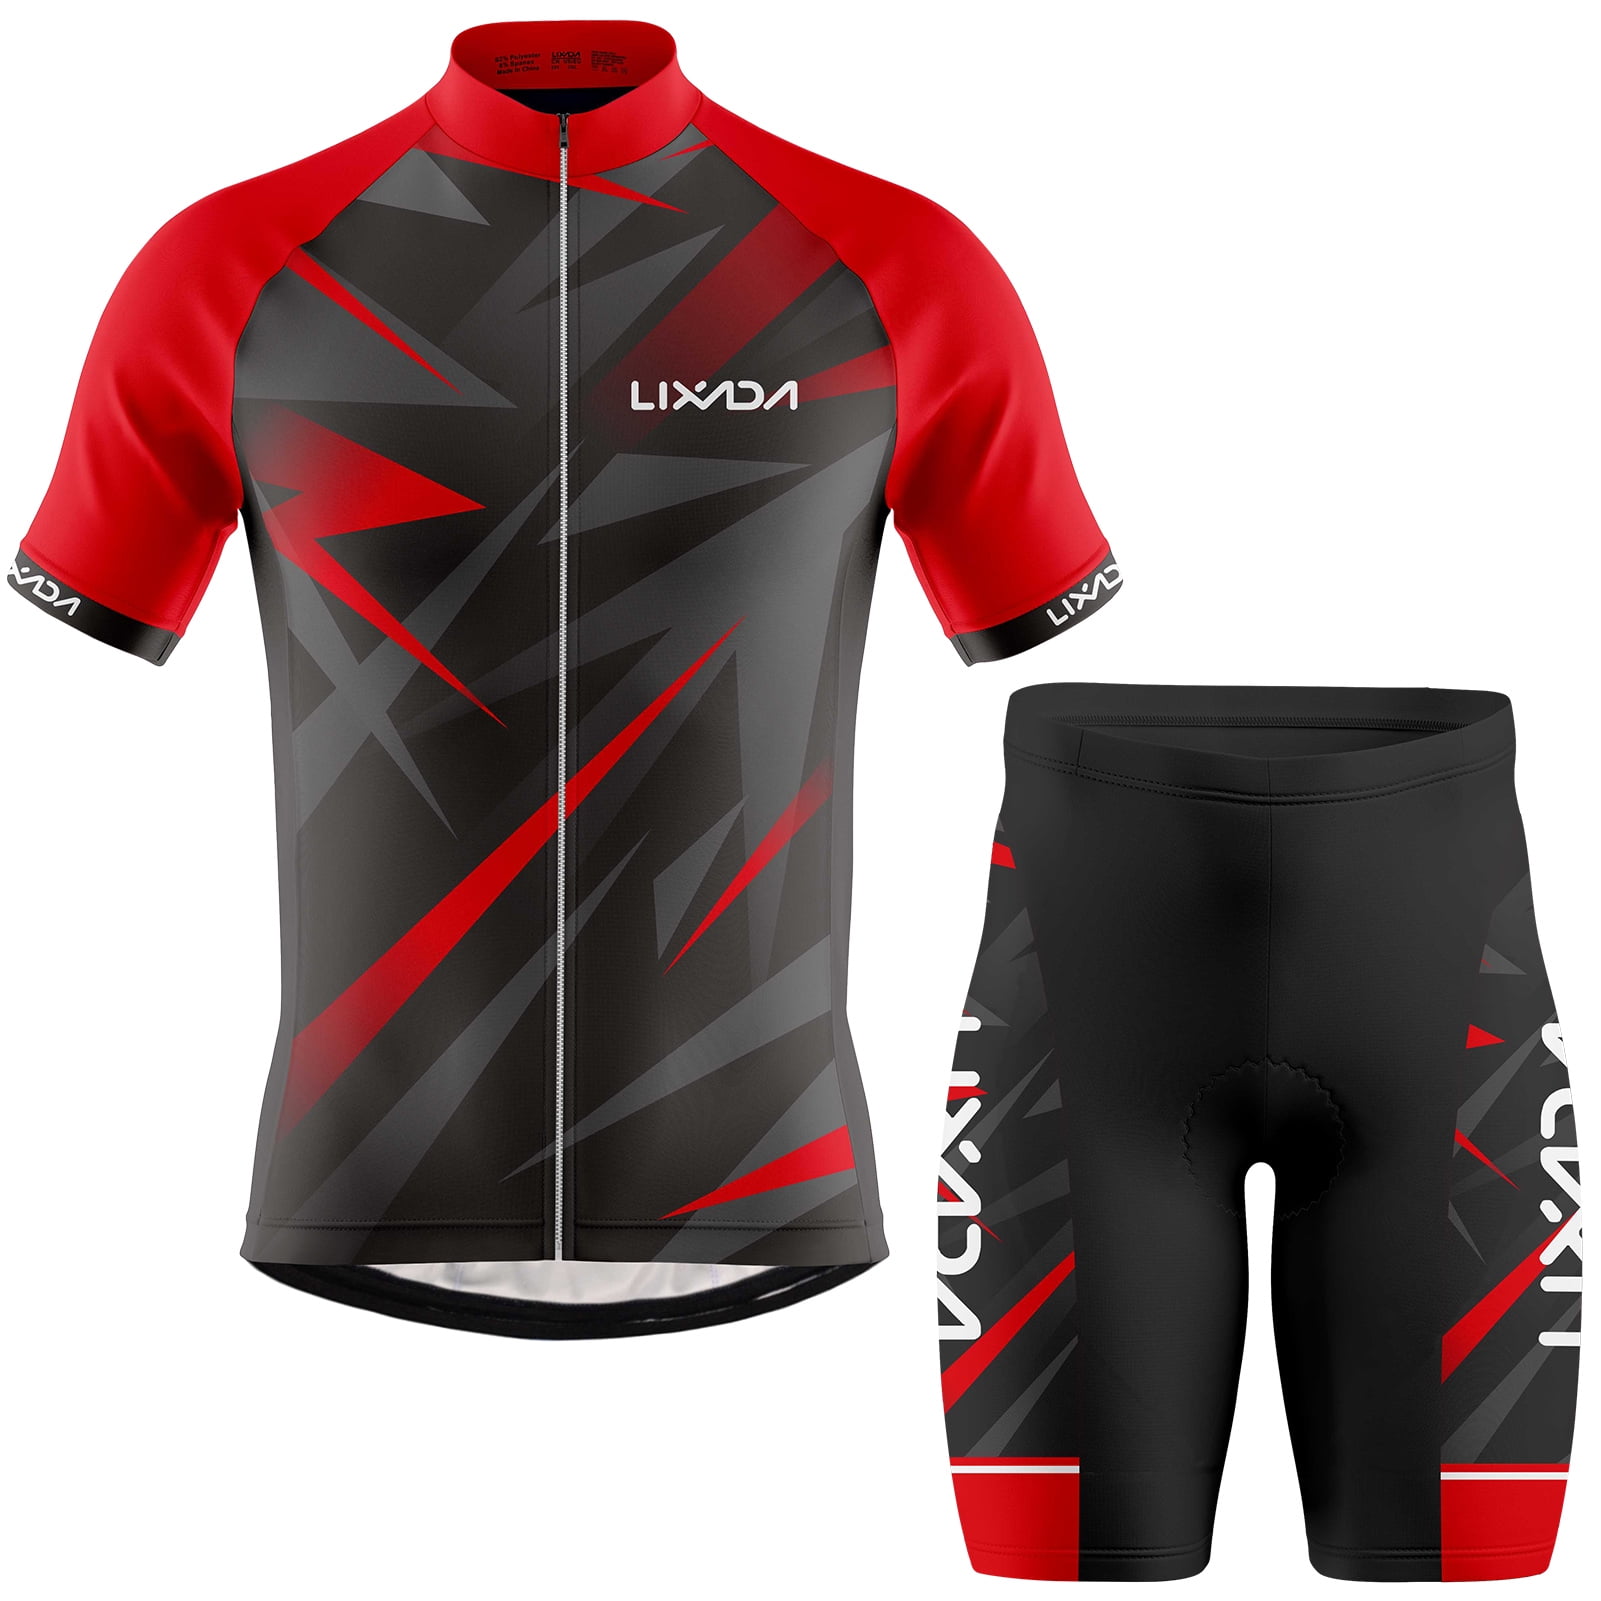 Cycling Bike Clothing Wear Short Sleeve Suit Jersey Sets+Bib Shorts S-3XL 